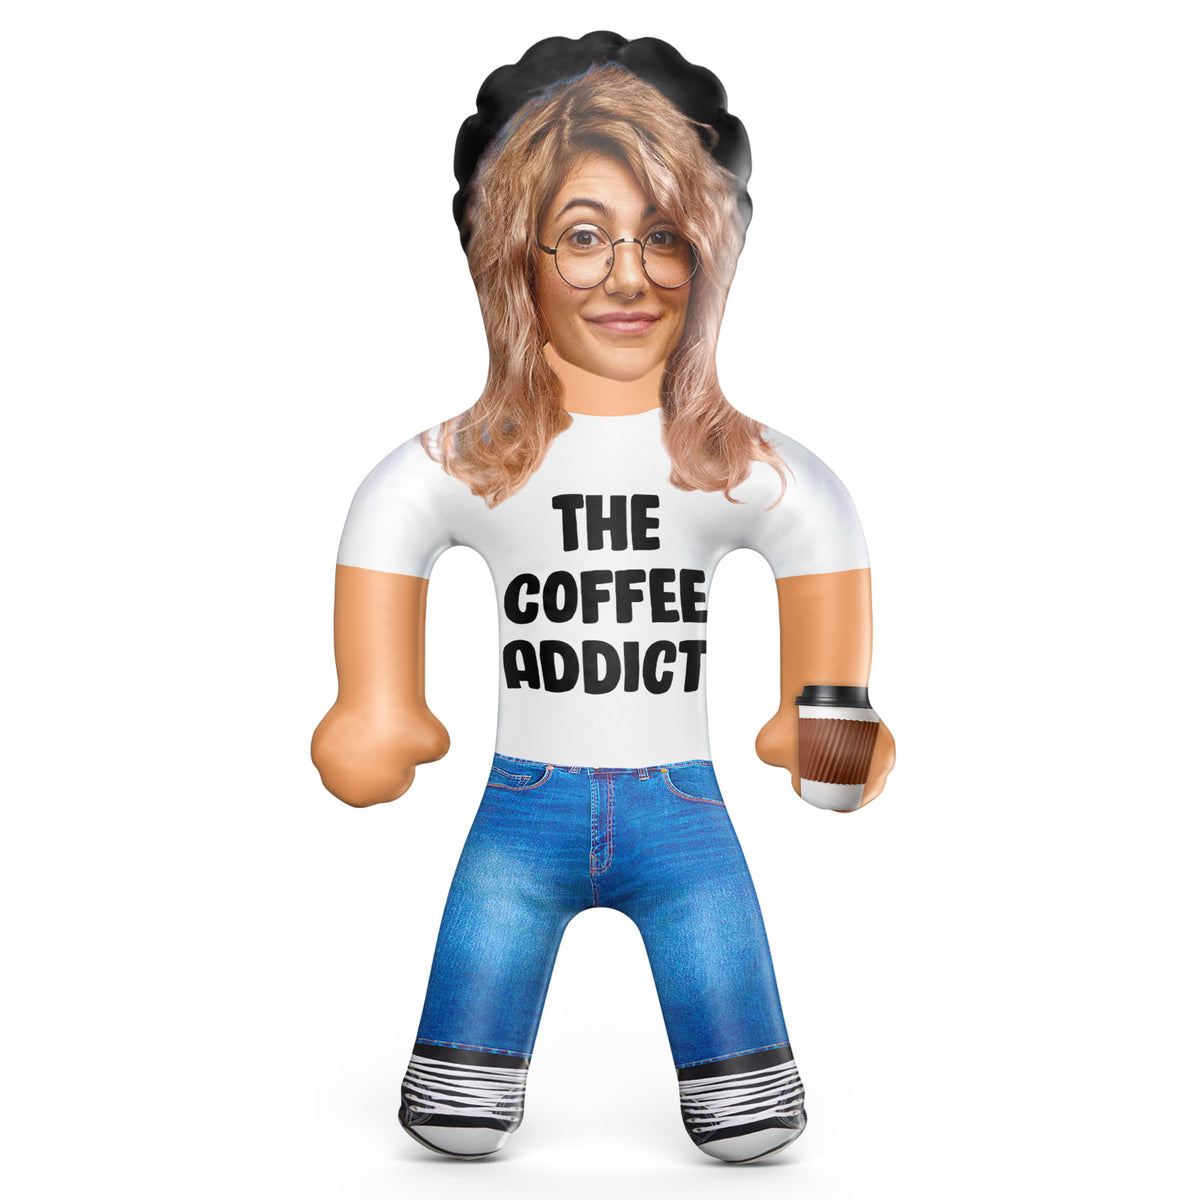 The Coffee Addict